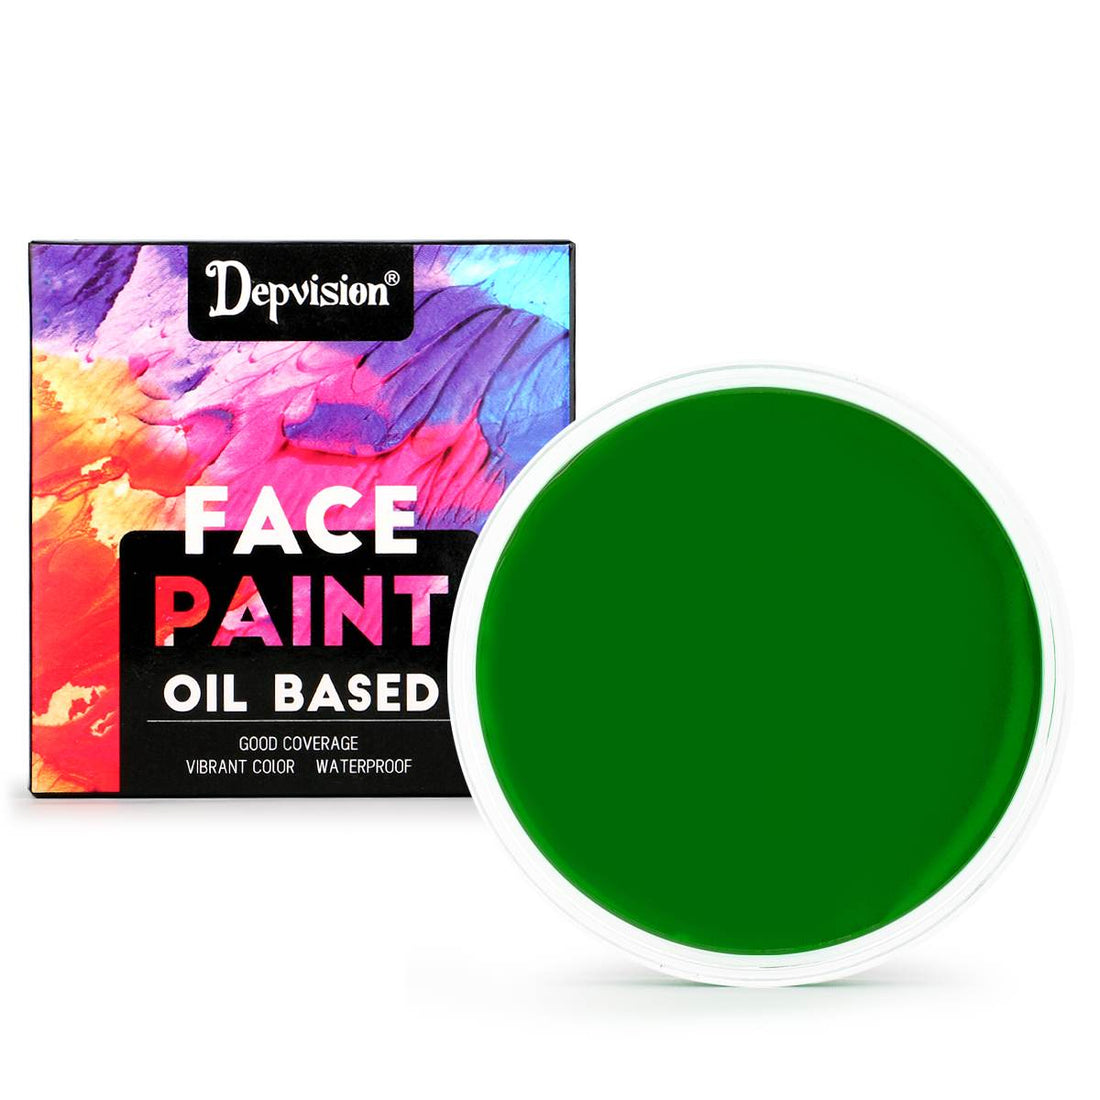 Waterproof Oil Based Face Paint - Light Green